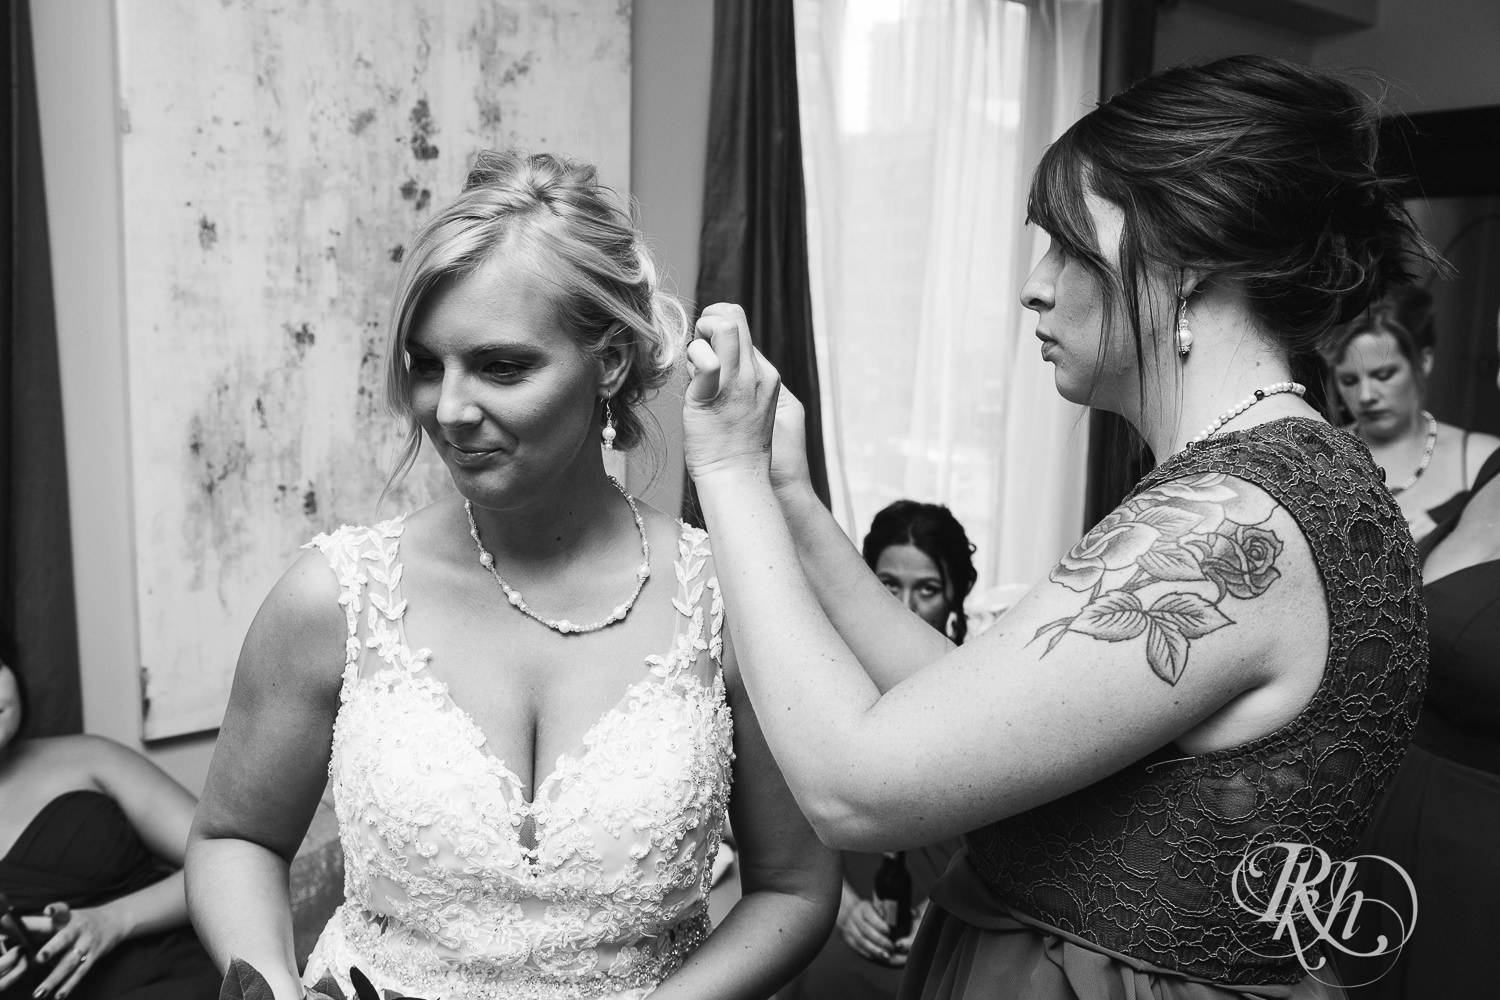 Wedding party help bride get dressed in Minneapolis, Minnesota.